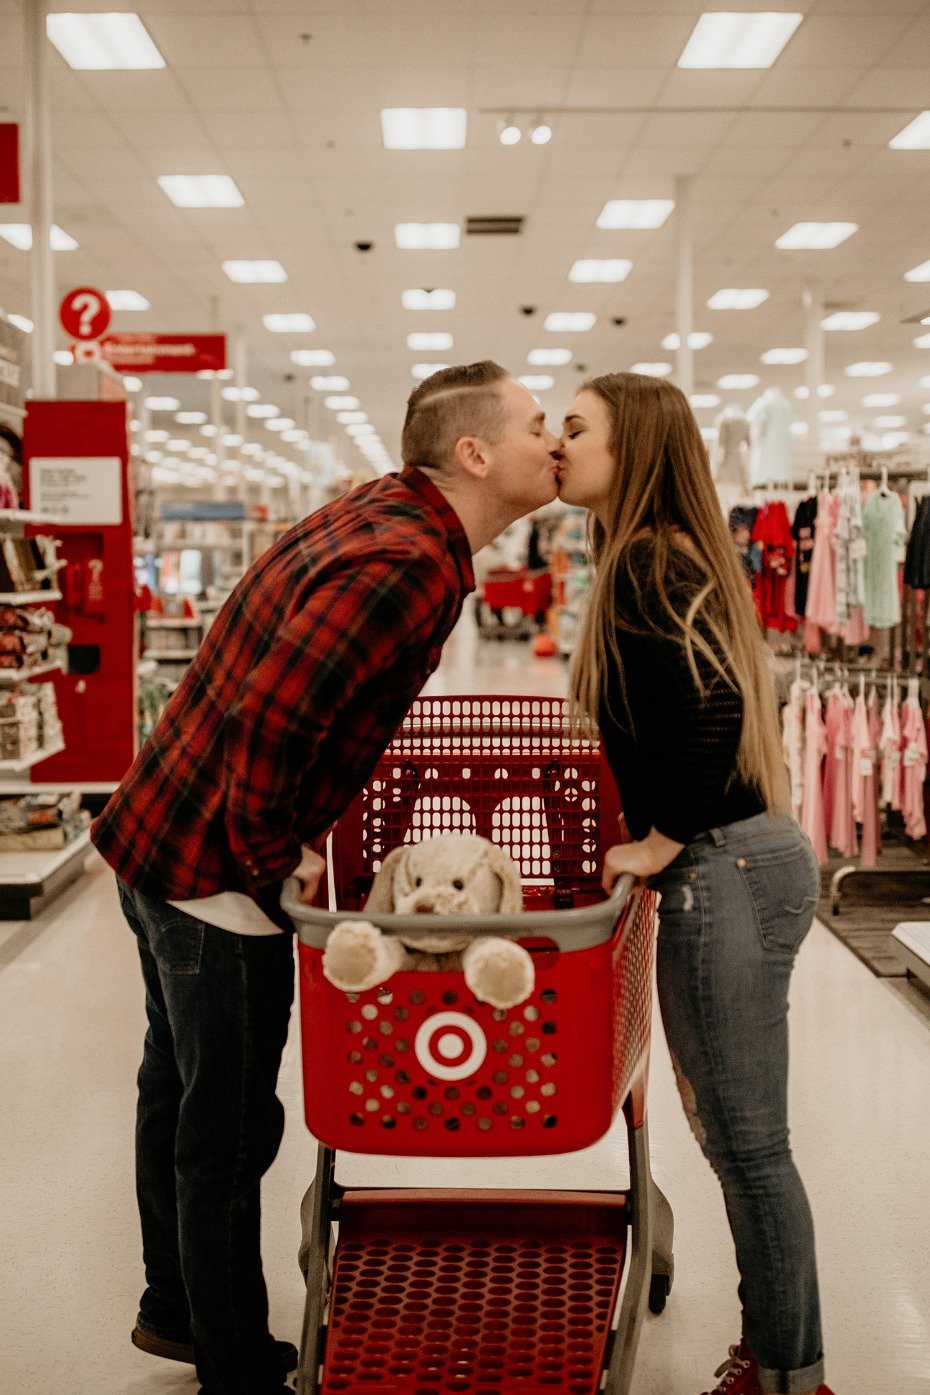 Cute Engagement shoot in Target